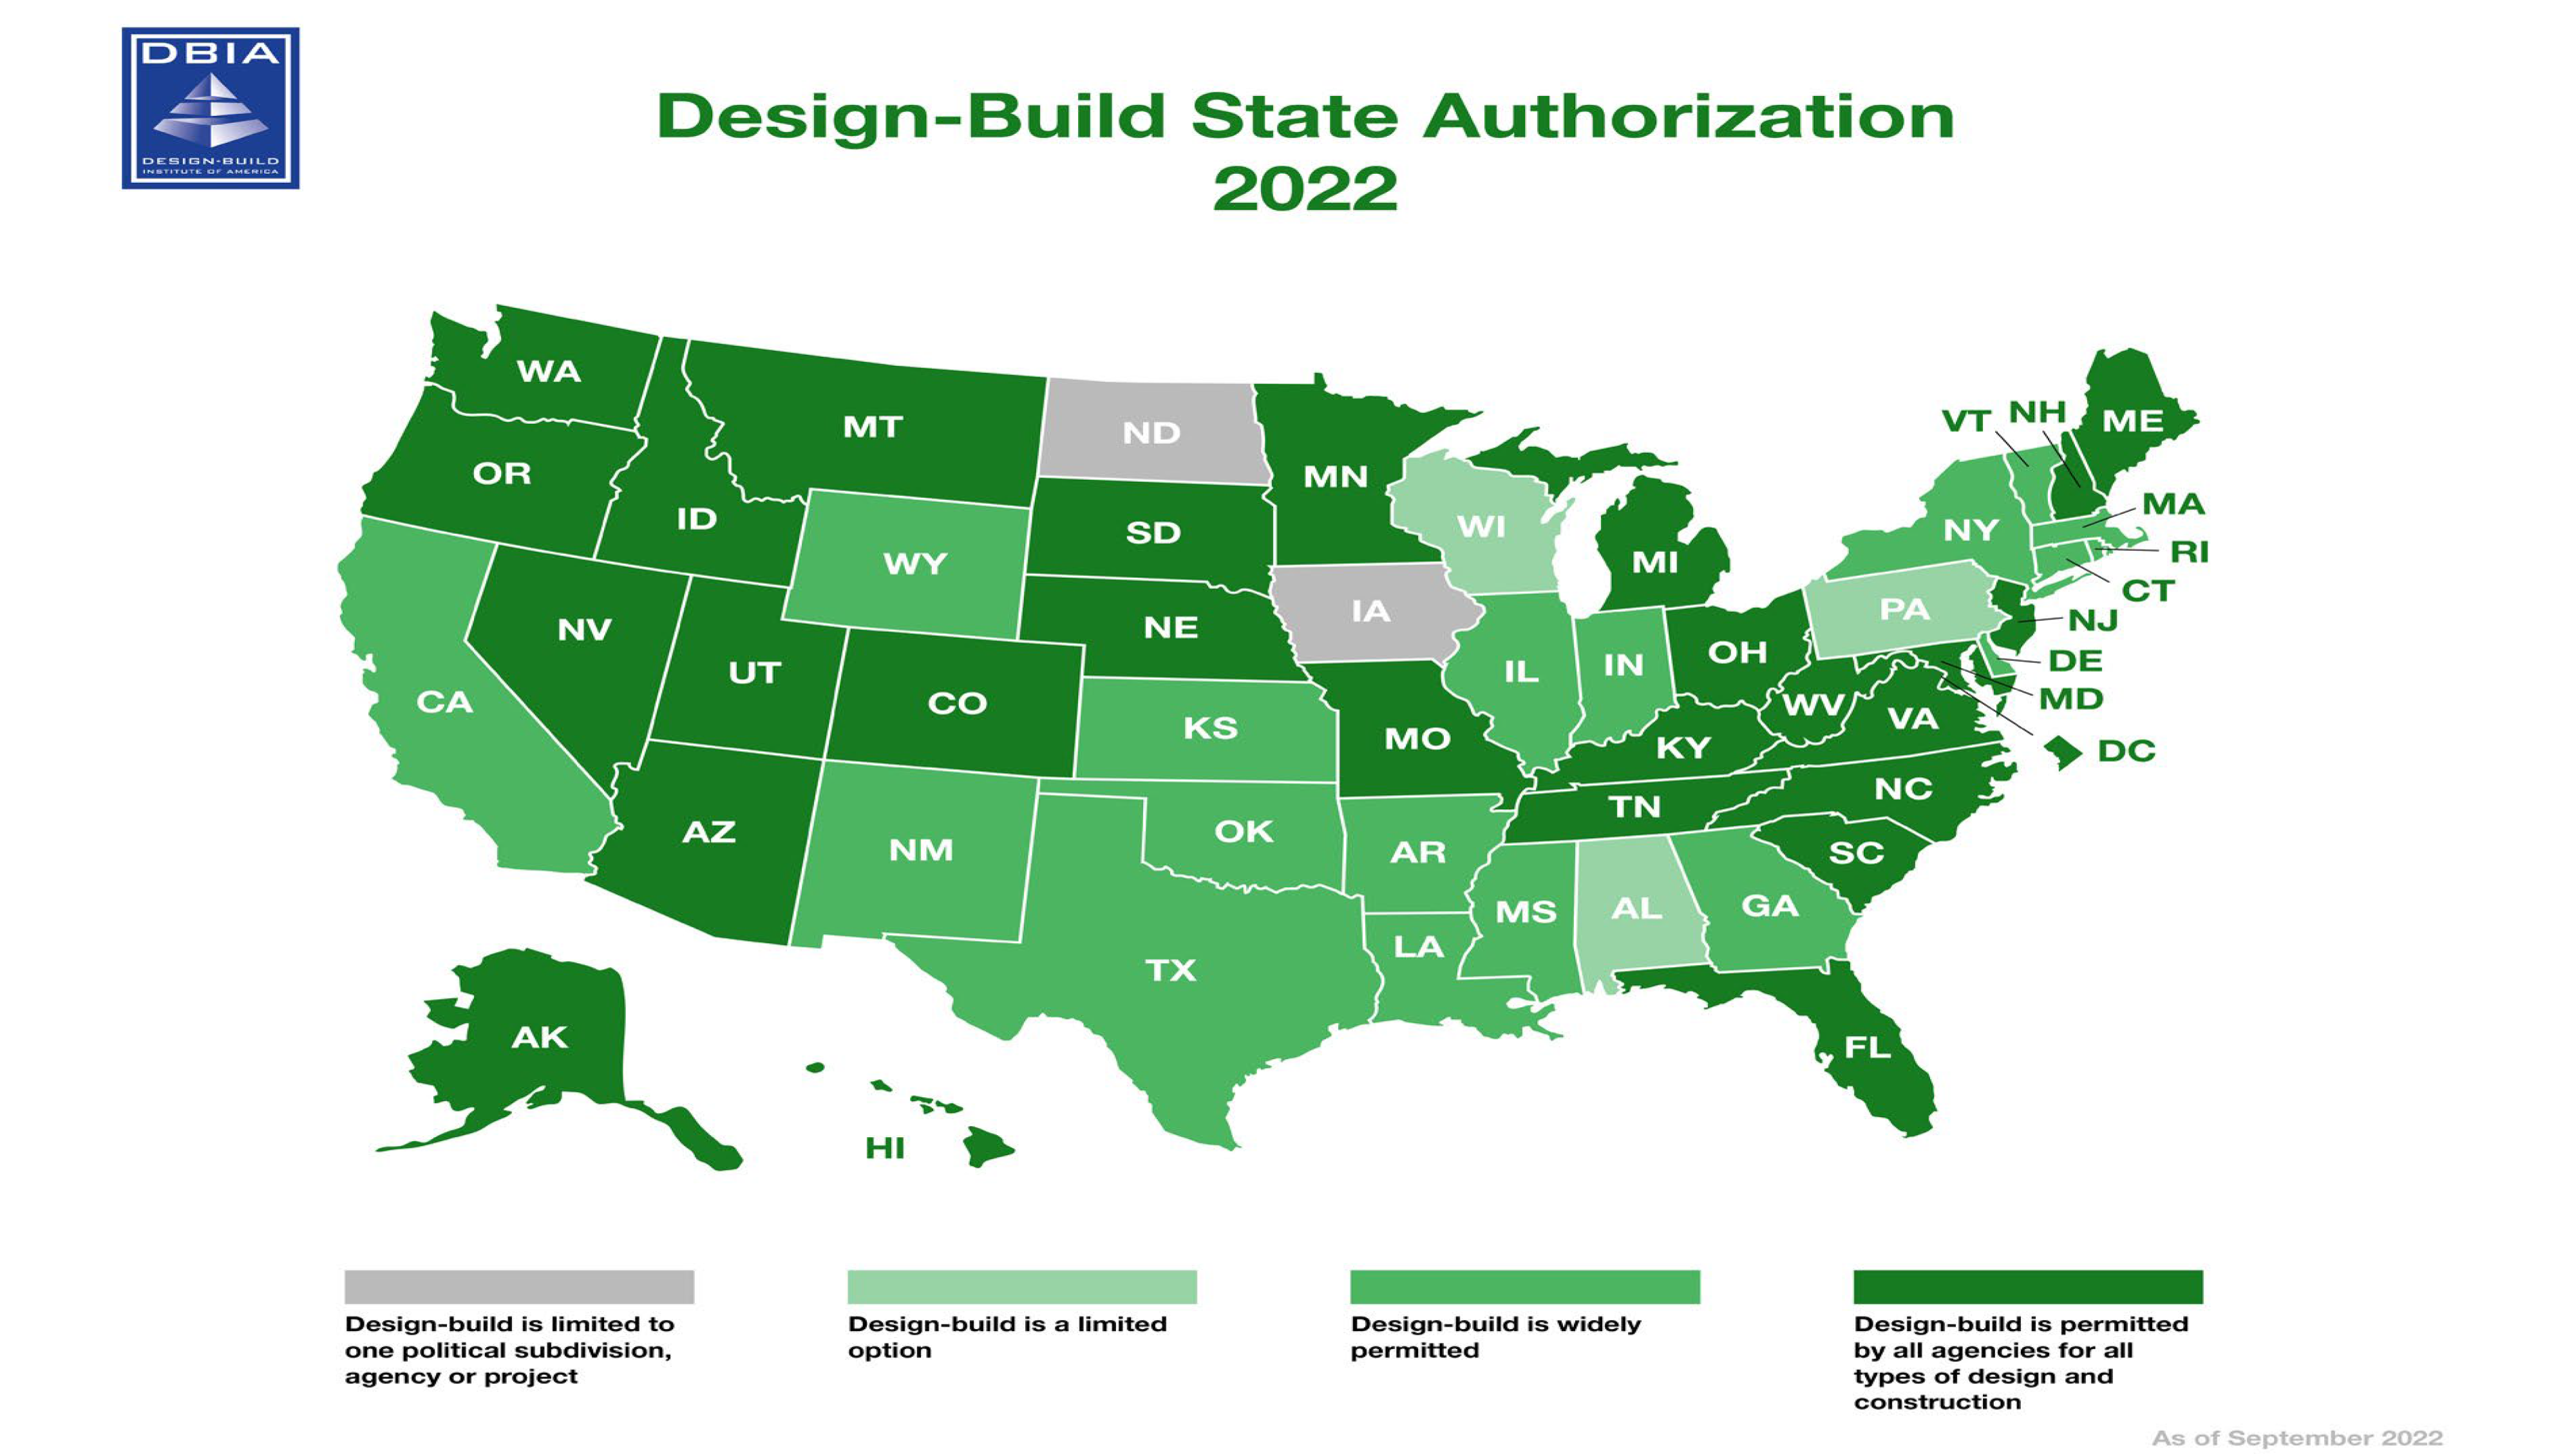 2022 Design-Build State Authorization Map